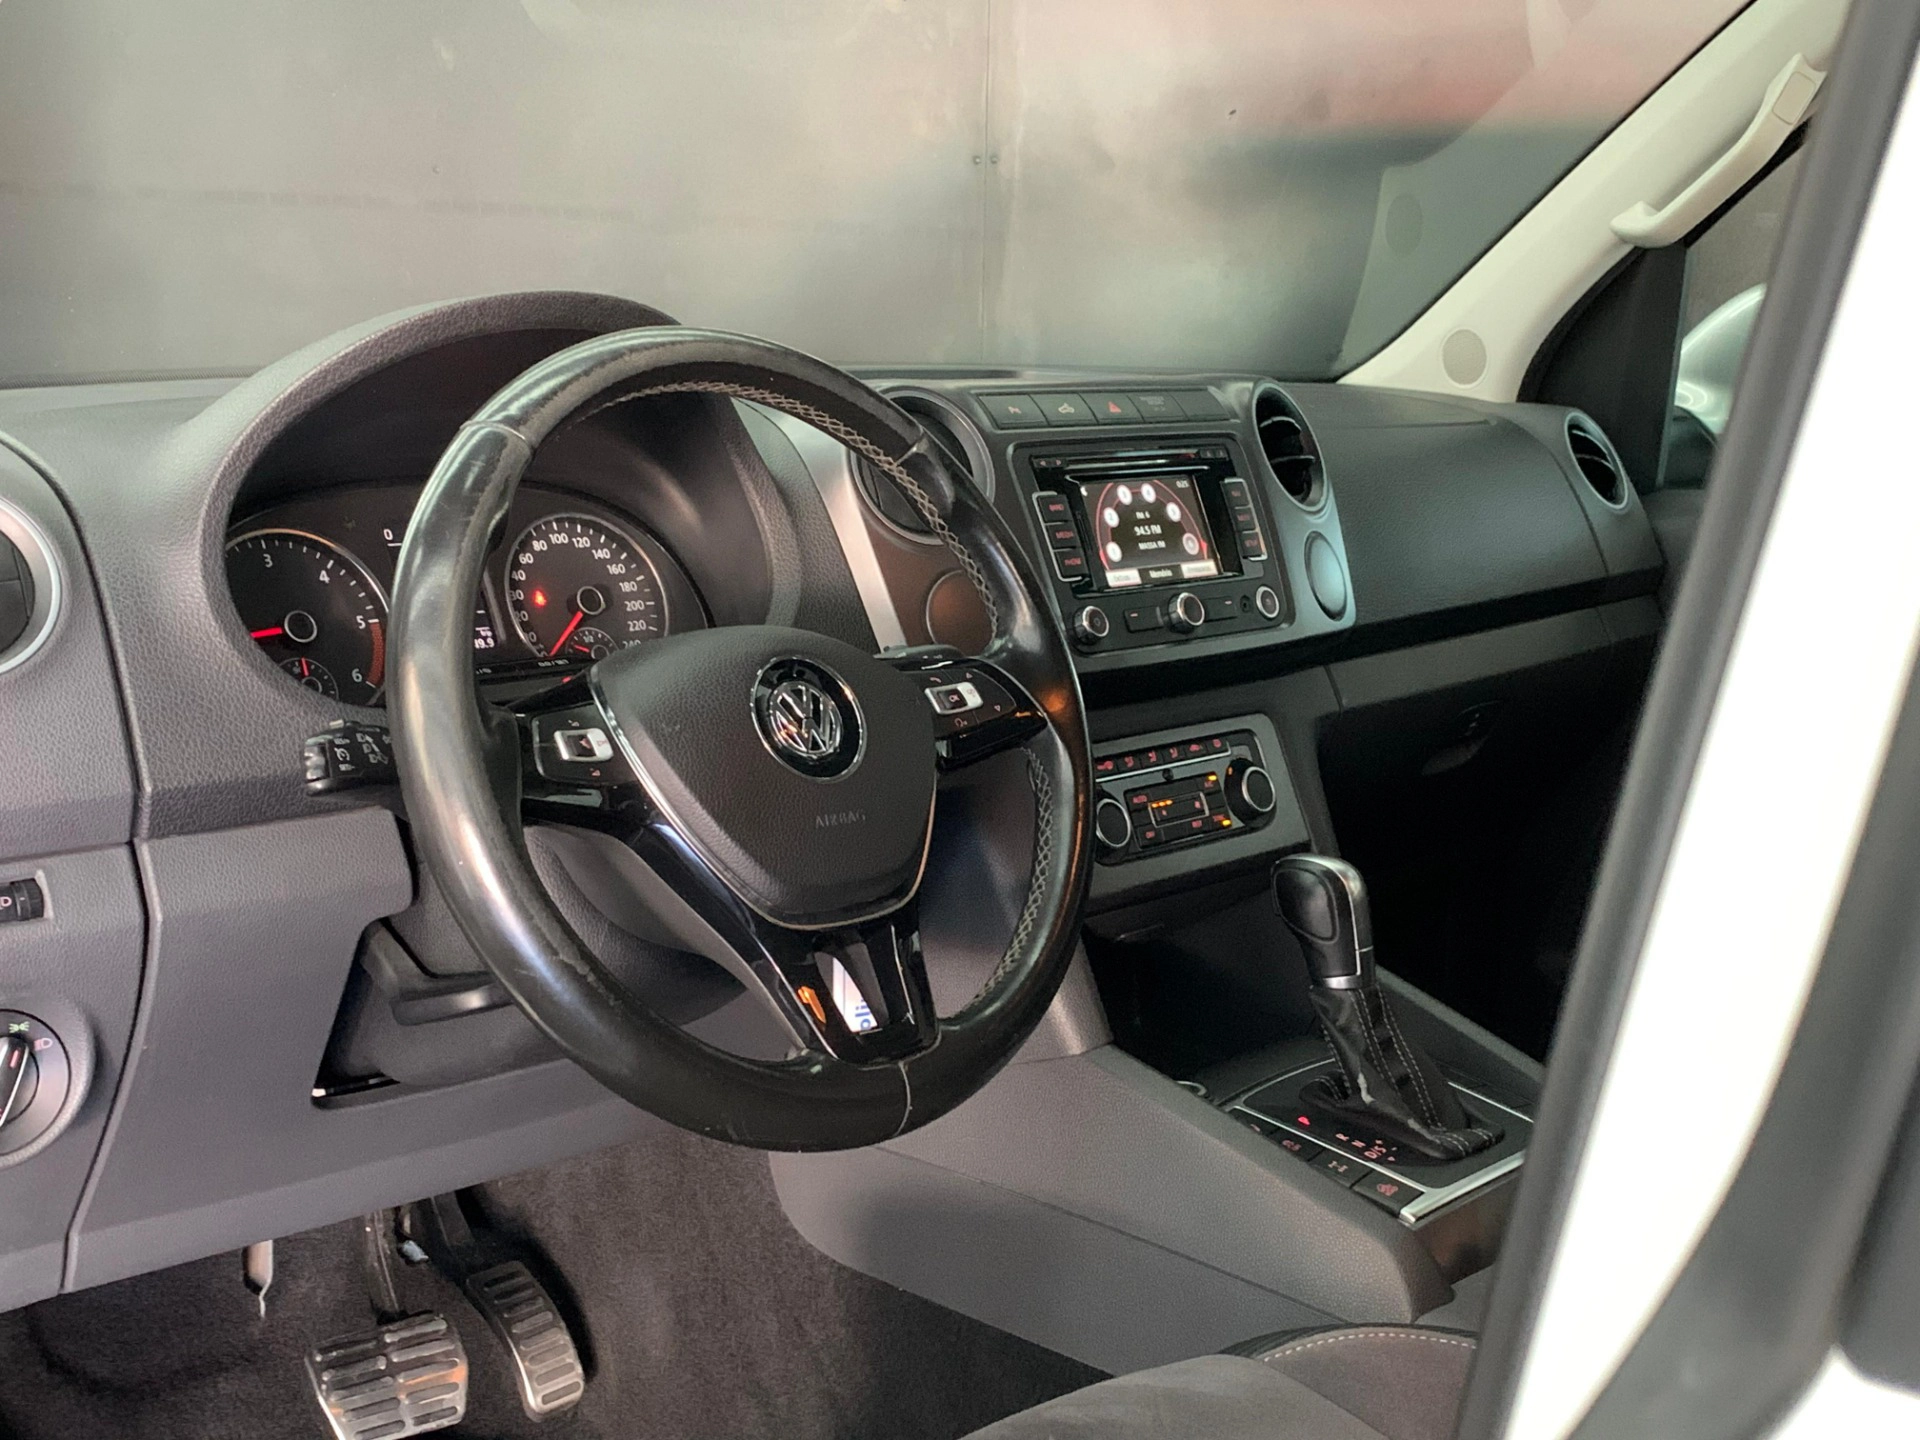 volkswagen AMAROK 2.0 HIGHLINE 4X4 CD 16V TURBO INTERCOOLER DIESEL 4P AUTOMÁTICO 2016